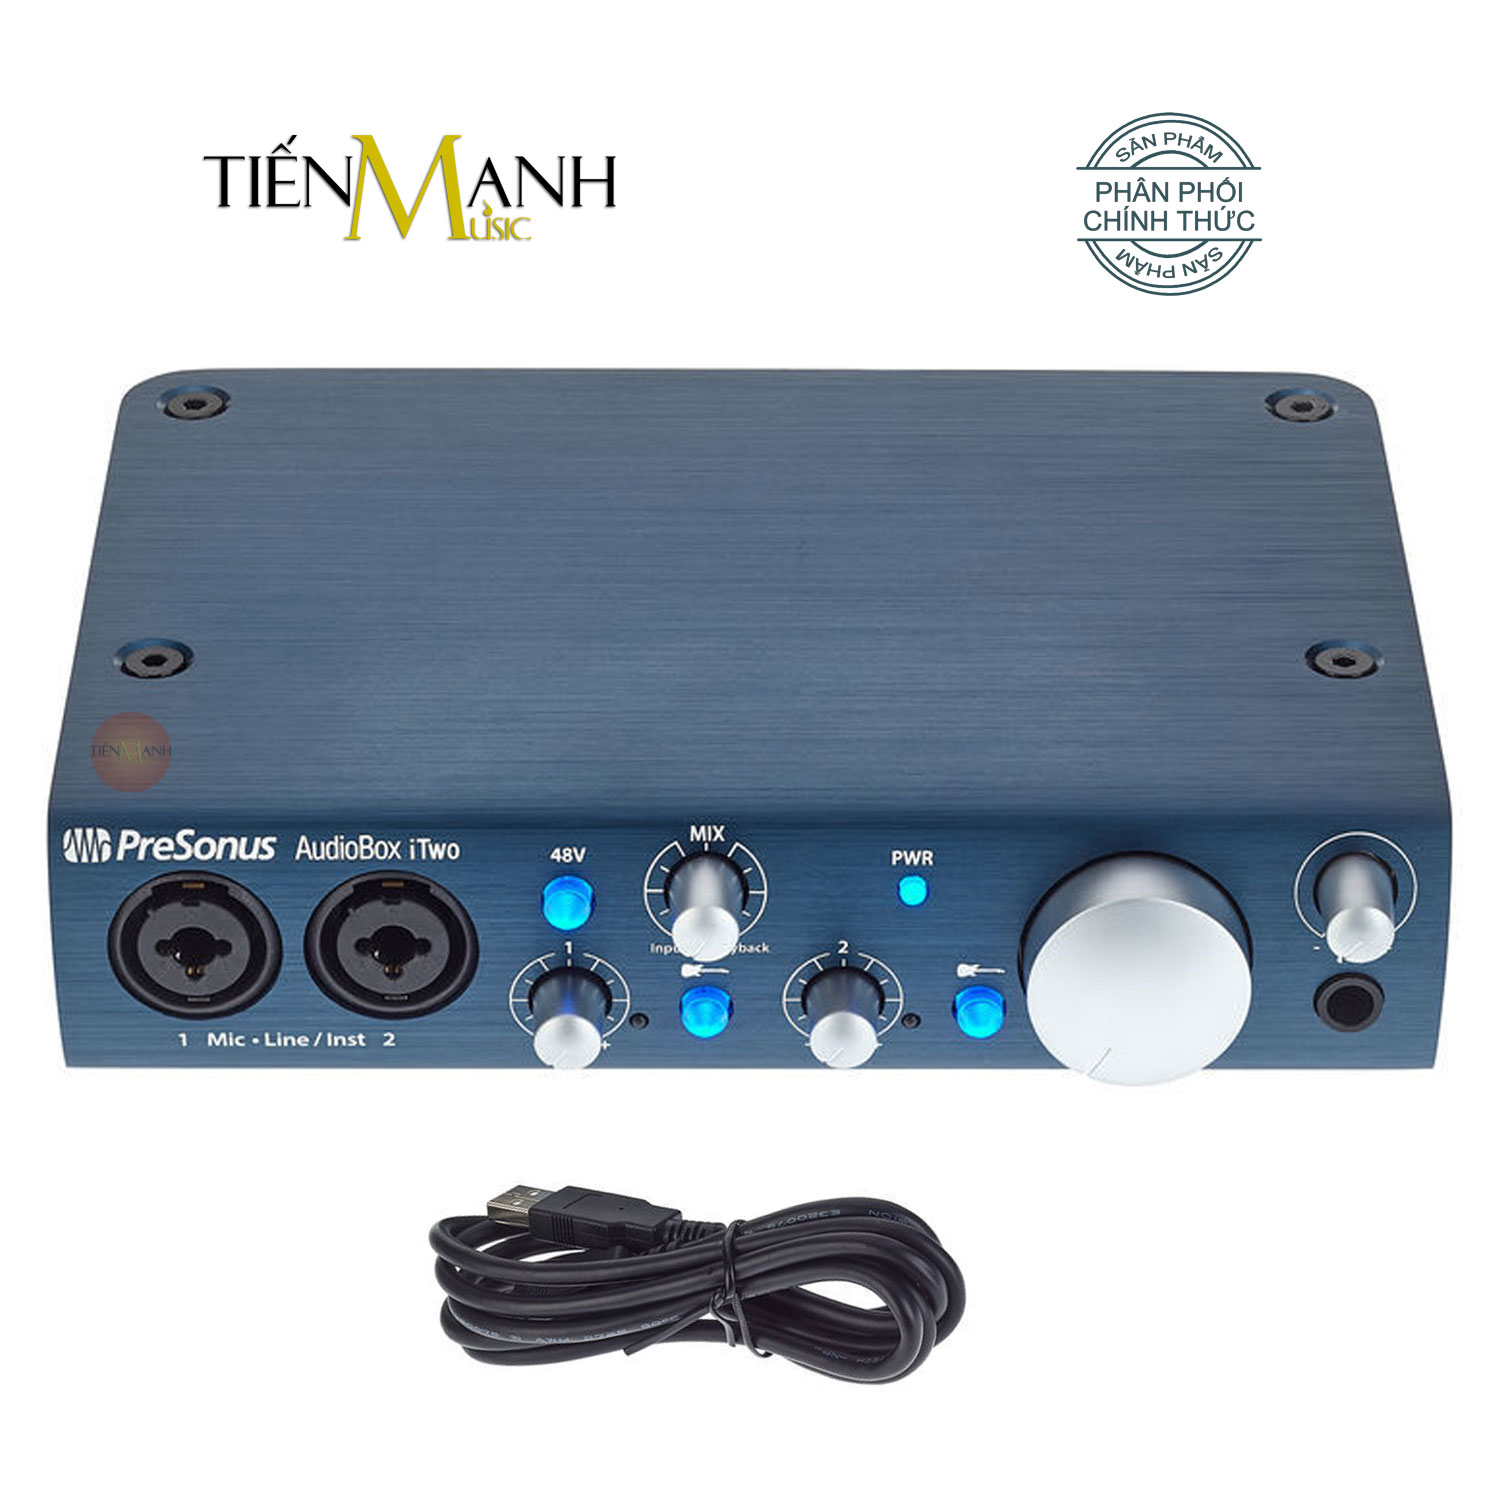 Soundcard PreSonus AudioBox iTwo - Sound Card Bộ Thu Âm Thanh và Livestream Audio Interface Audio Box iTwo